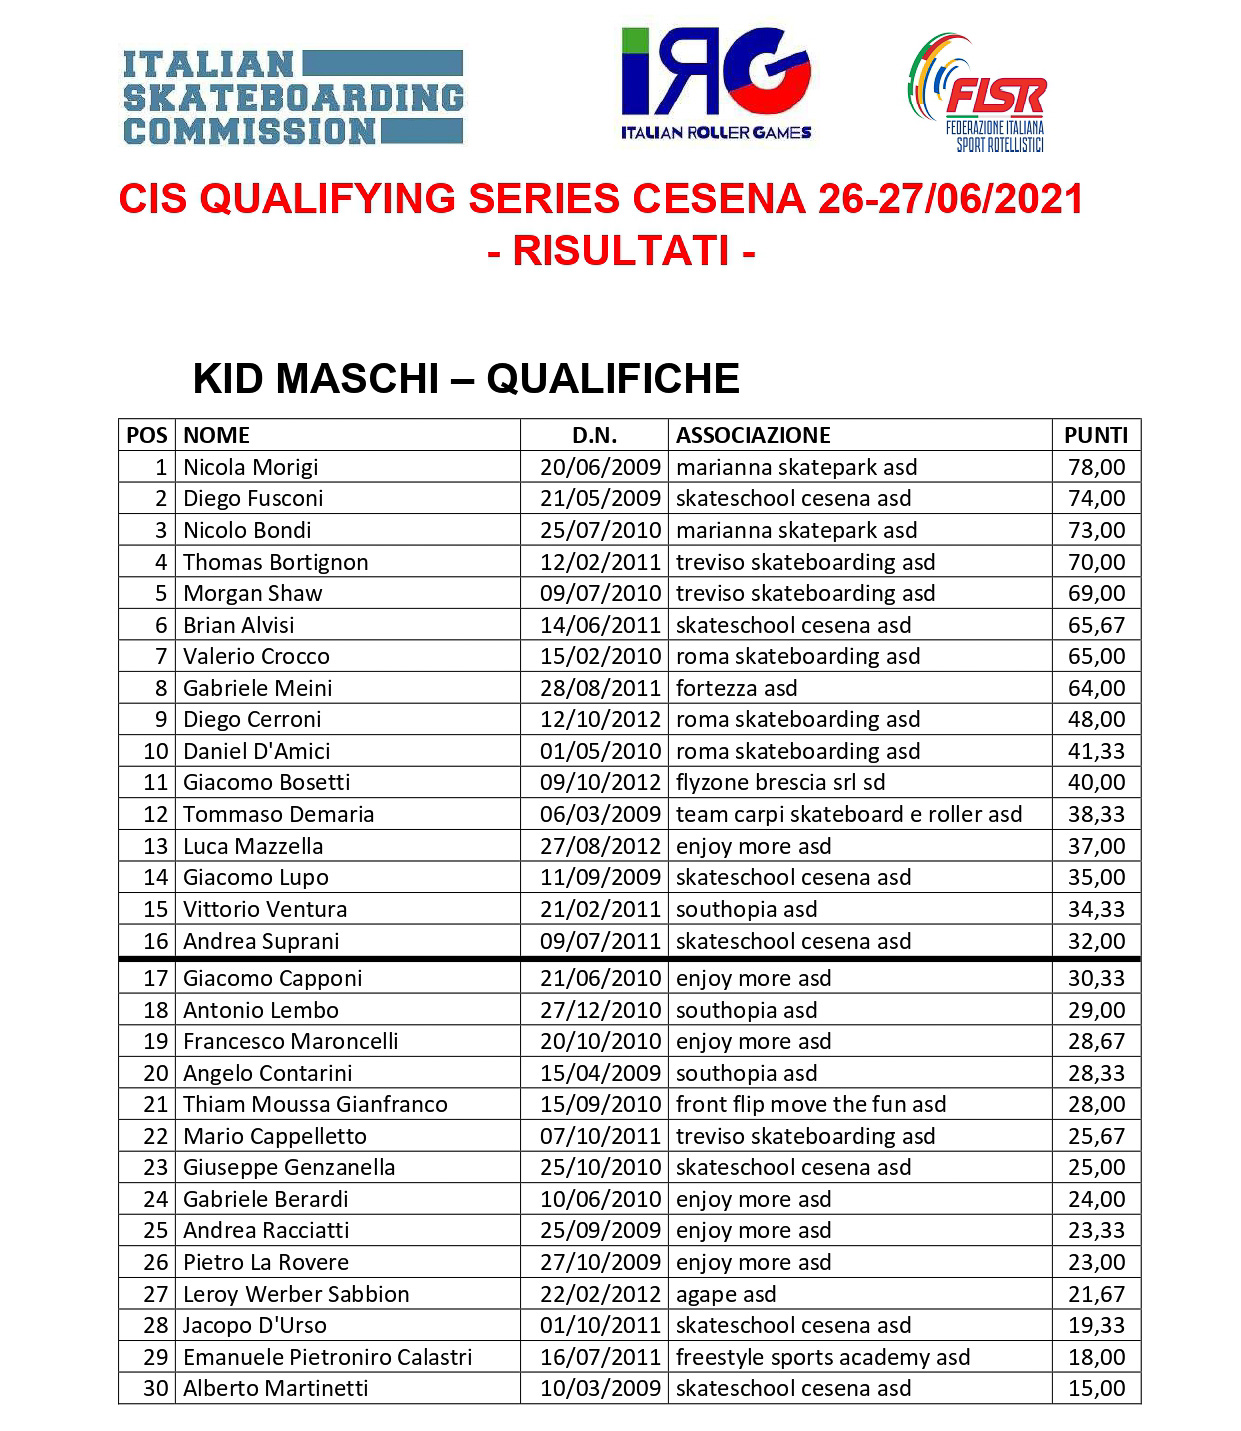 Classifiche Qualifying Series Cesena - Kid Maschi Qualifiche